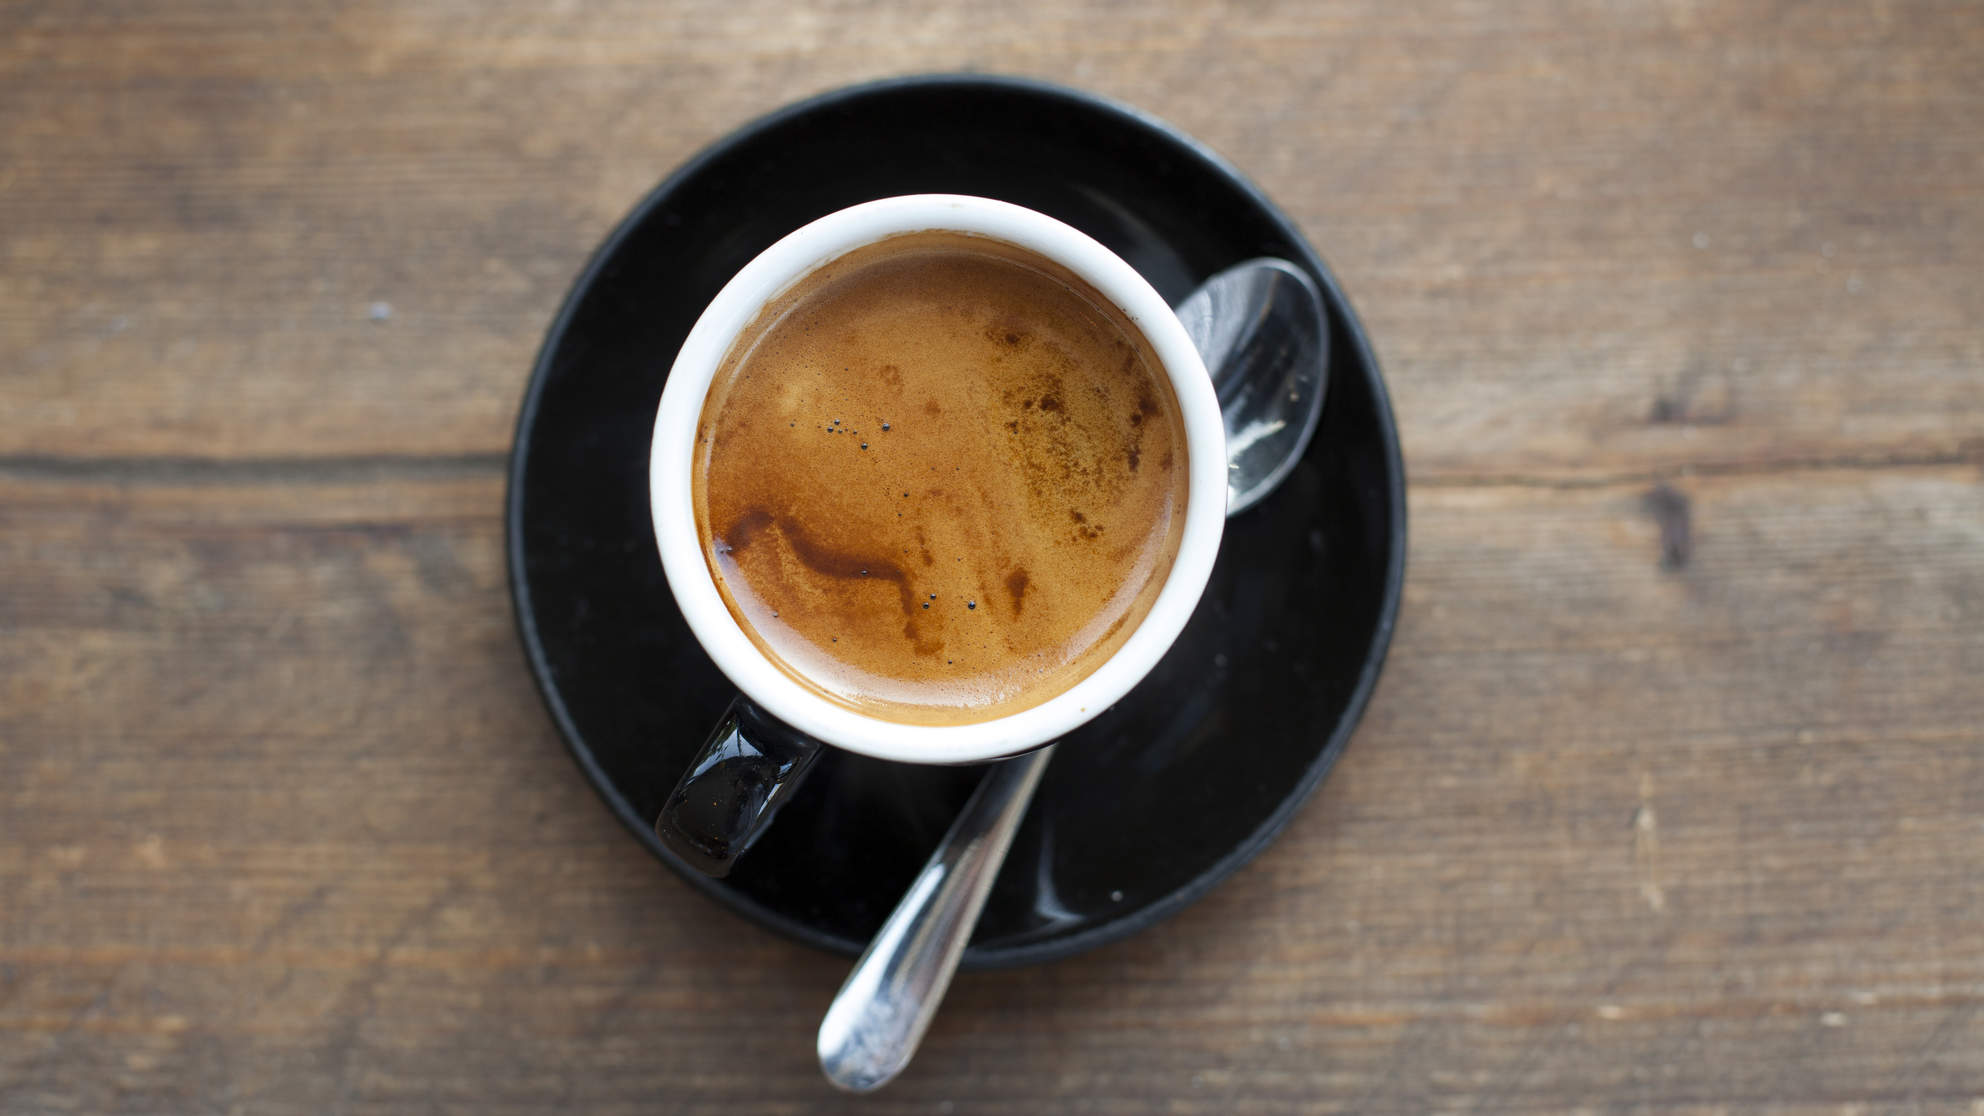 Gwyneth Paltrow's Goop Detox Includes an At-Home Coffee Enema - Health